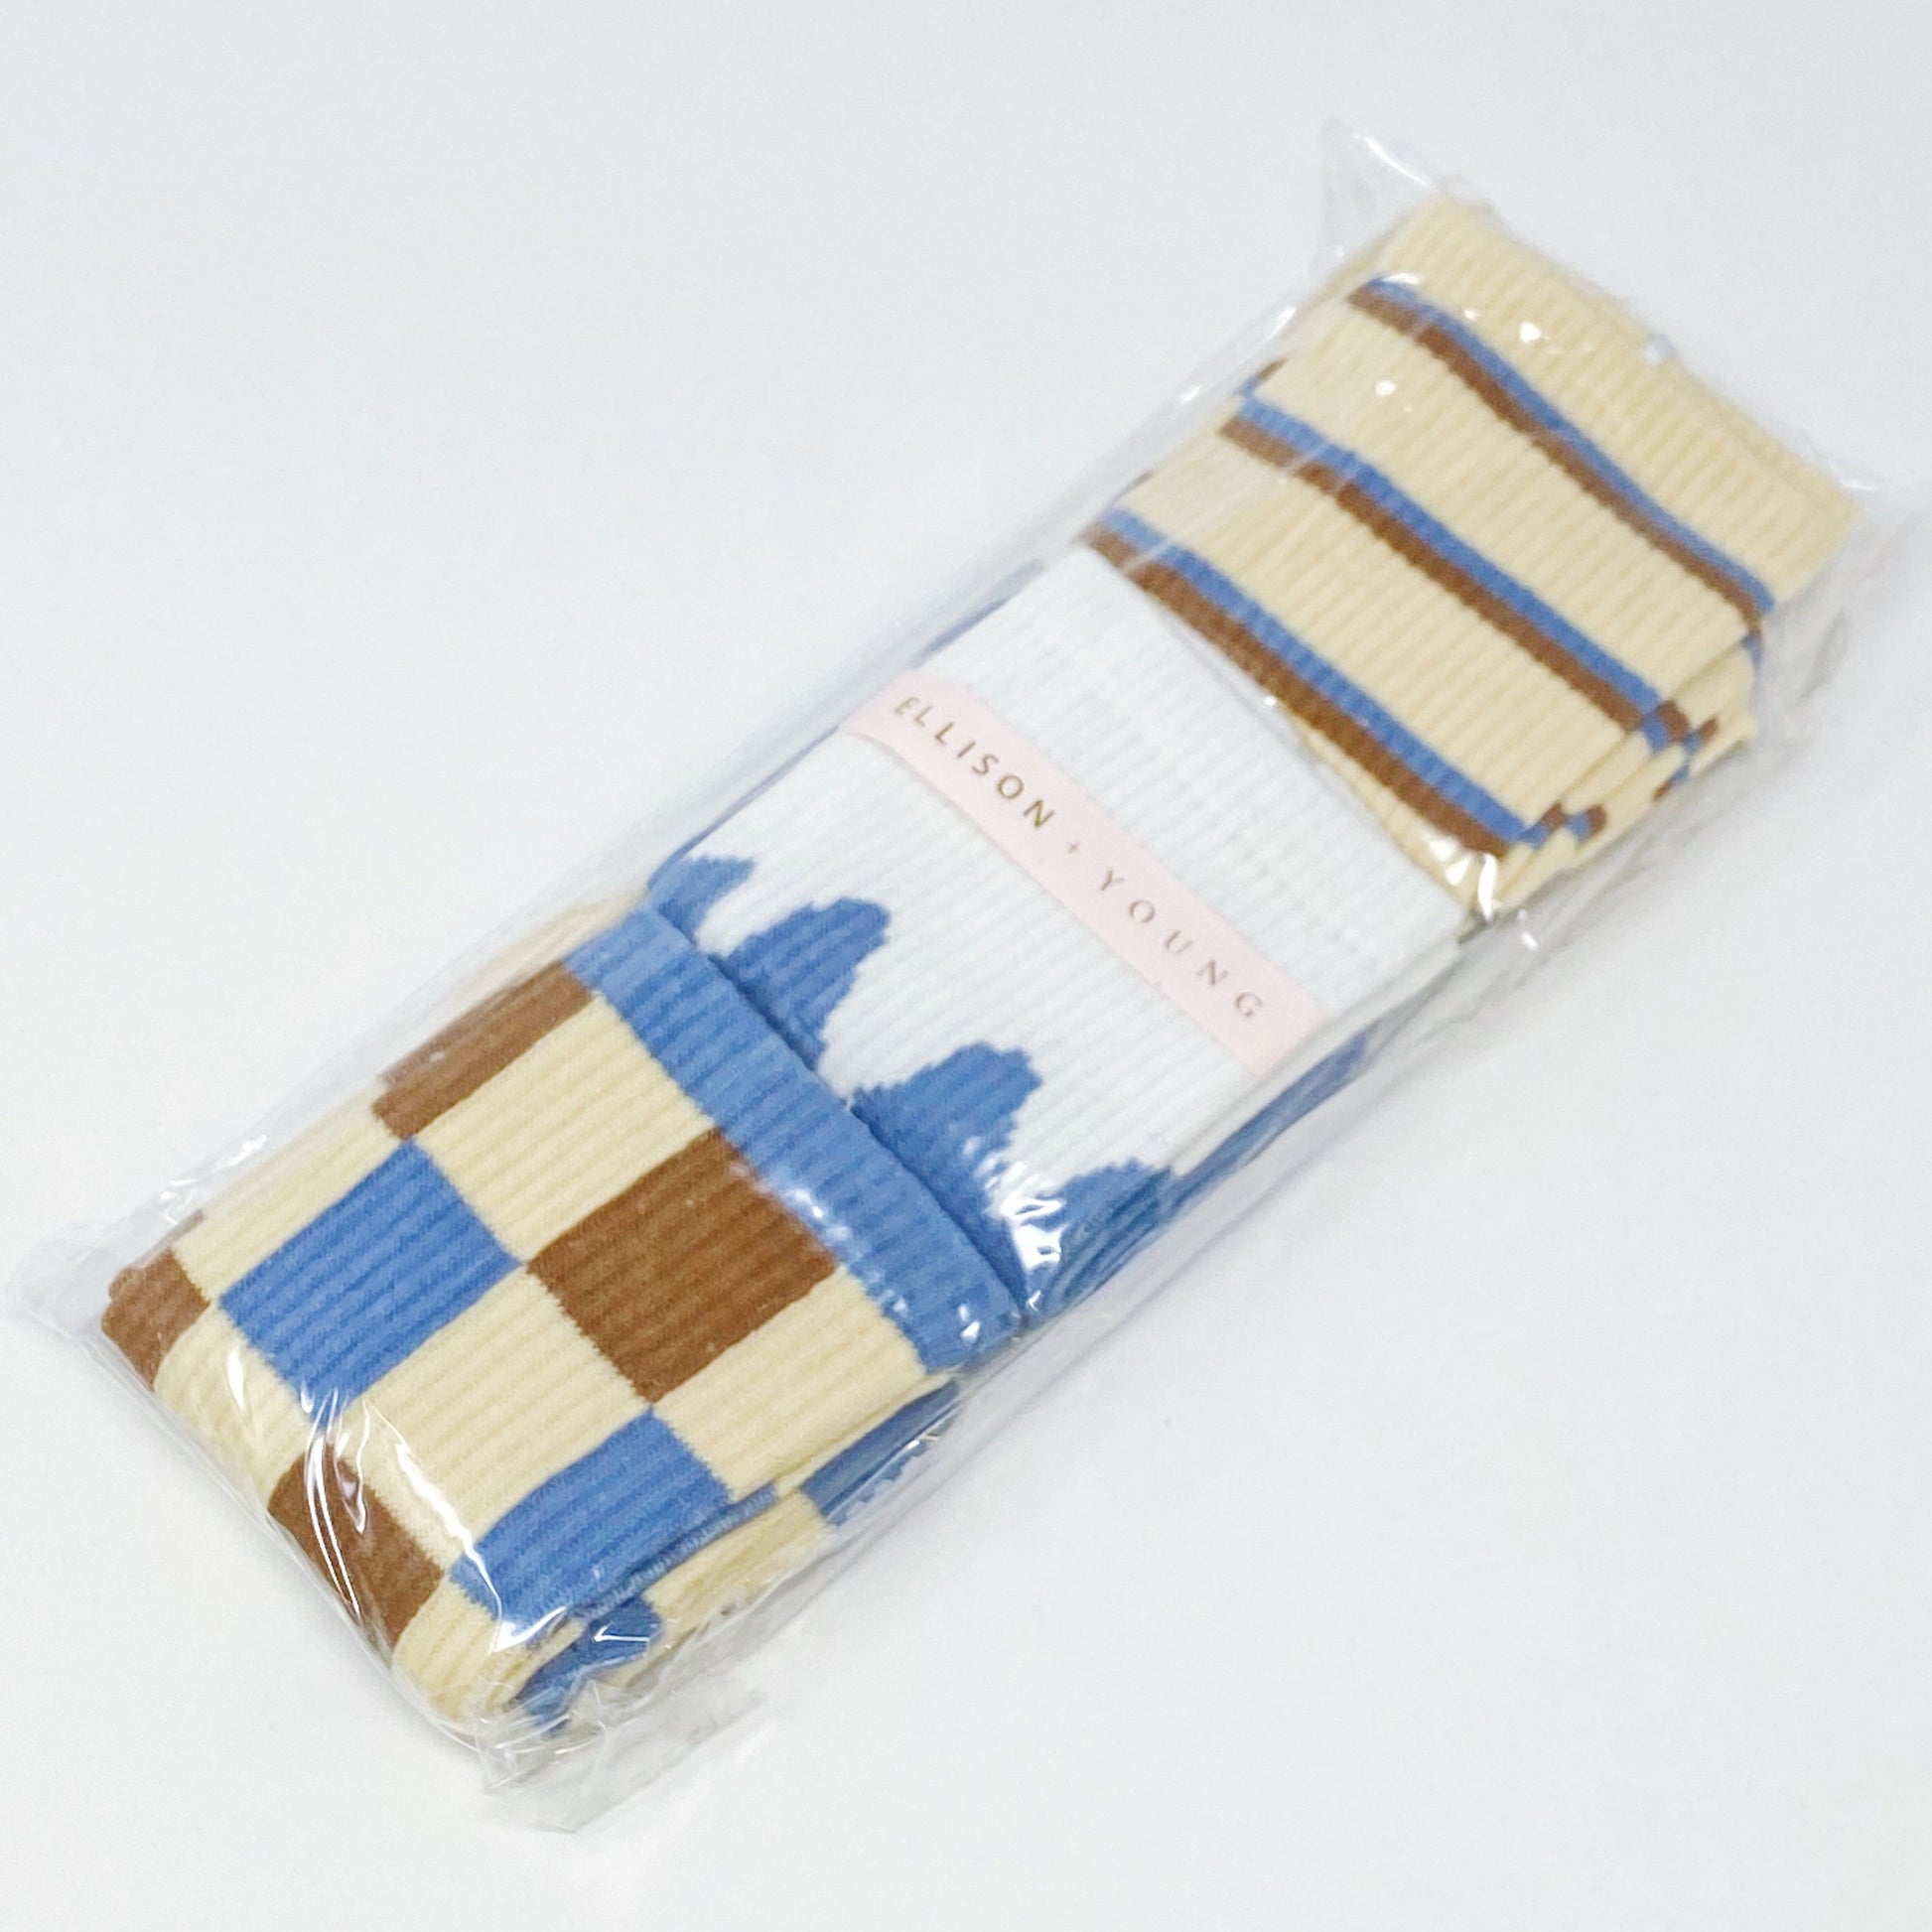 Trendy Pattern Trio Socks Set - Scarvesnthangs